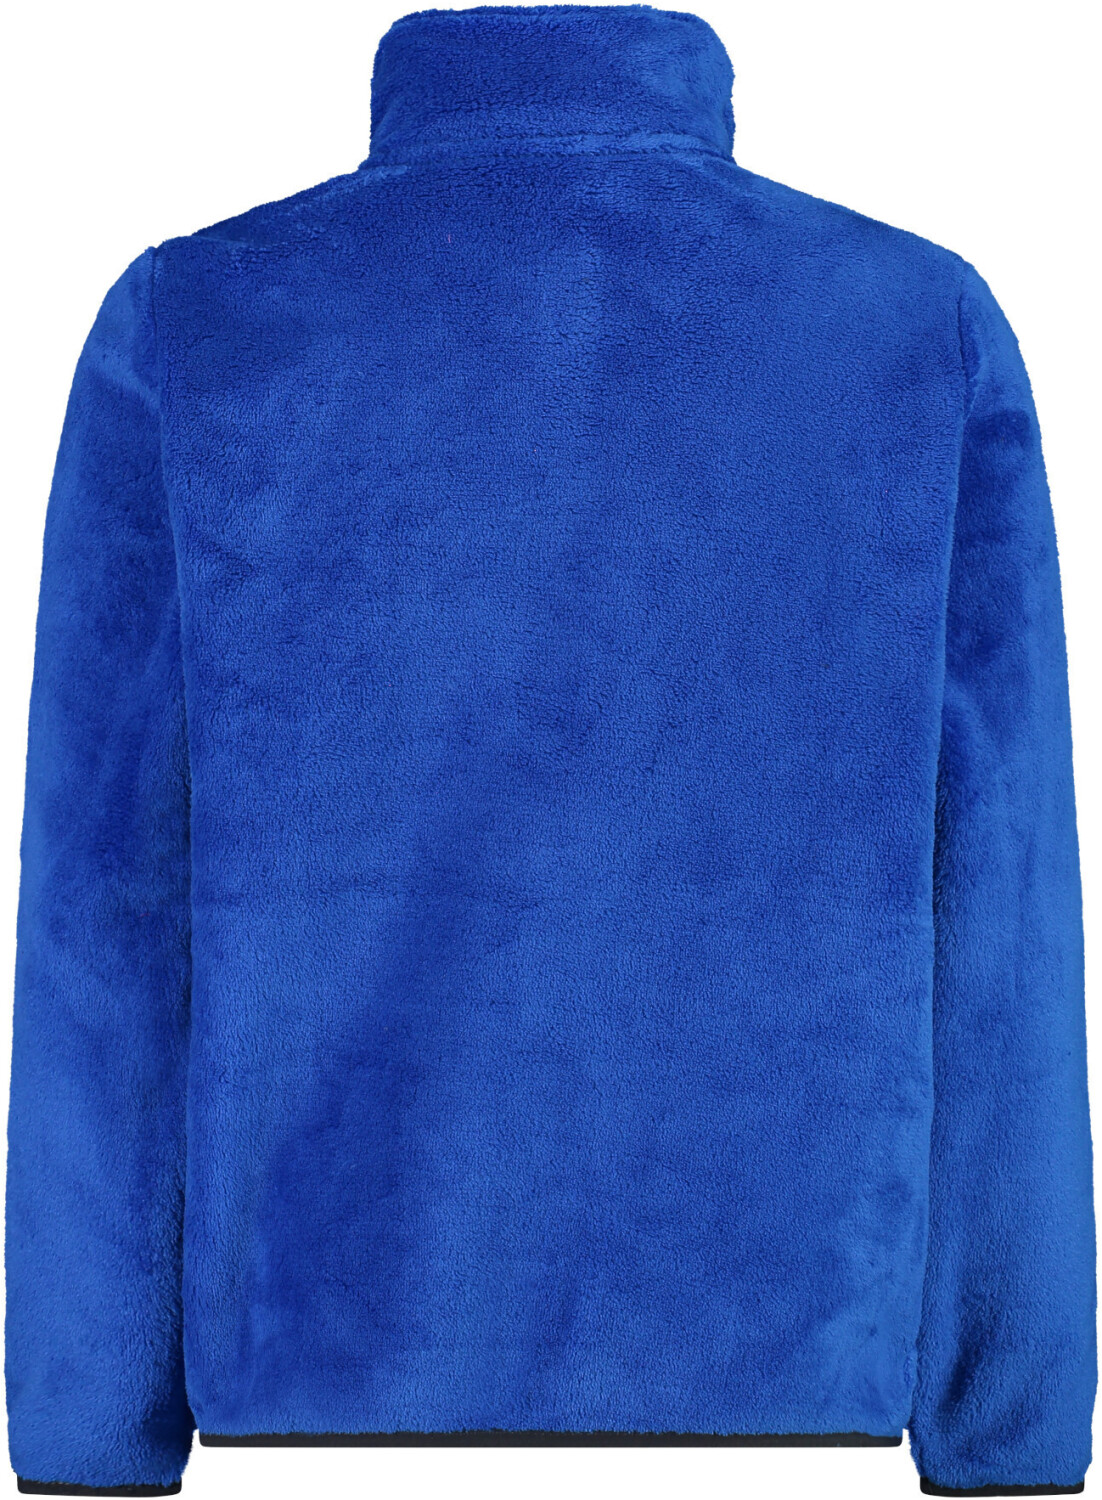 Preisvergleich | € bei CMP Boy (38P1414) Jacket ab b.blue-danubio 21,99